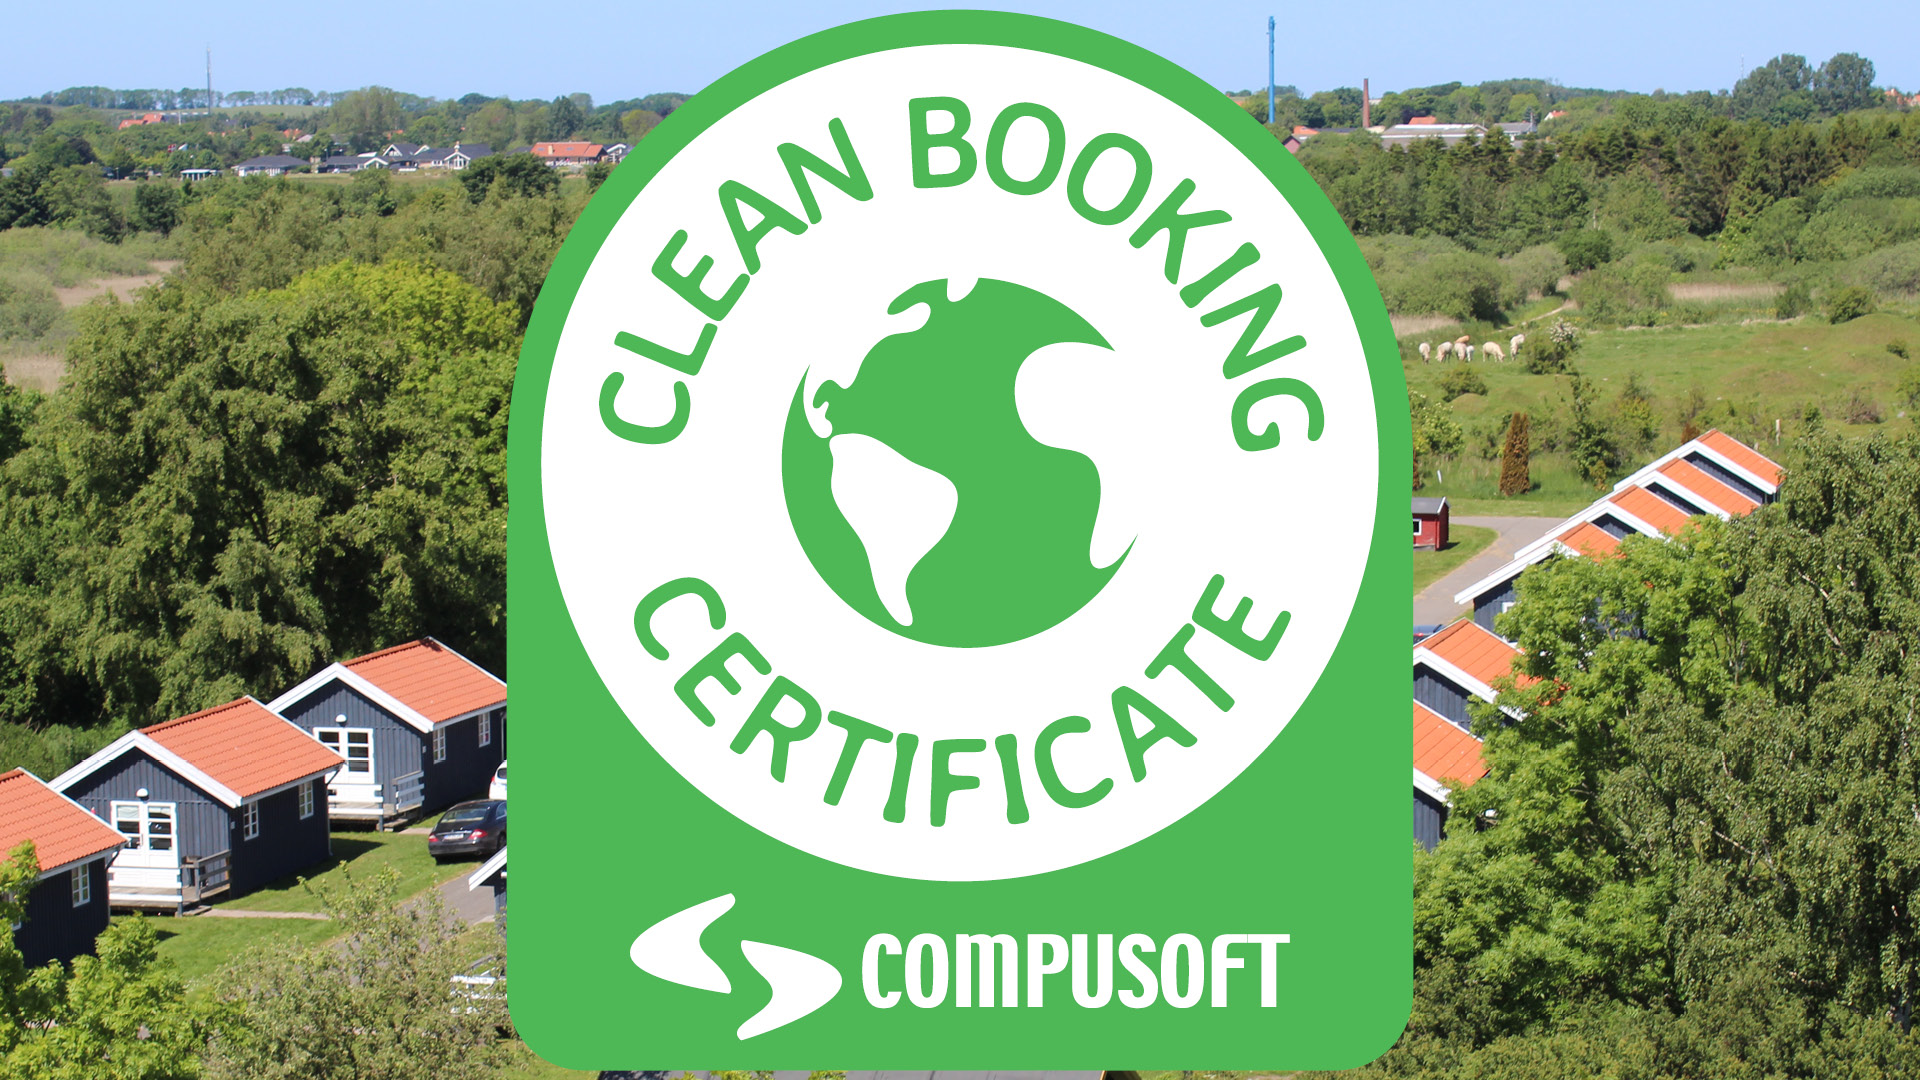 sommmerlandsj-sommerland-sjaelland-forlystelsespark-odsherred-miljoe-baeredygtighed-energibesparelse-miljoemaerkning-gron-profil-clean-booking-certificate-compusoft.jpg